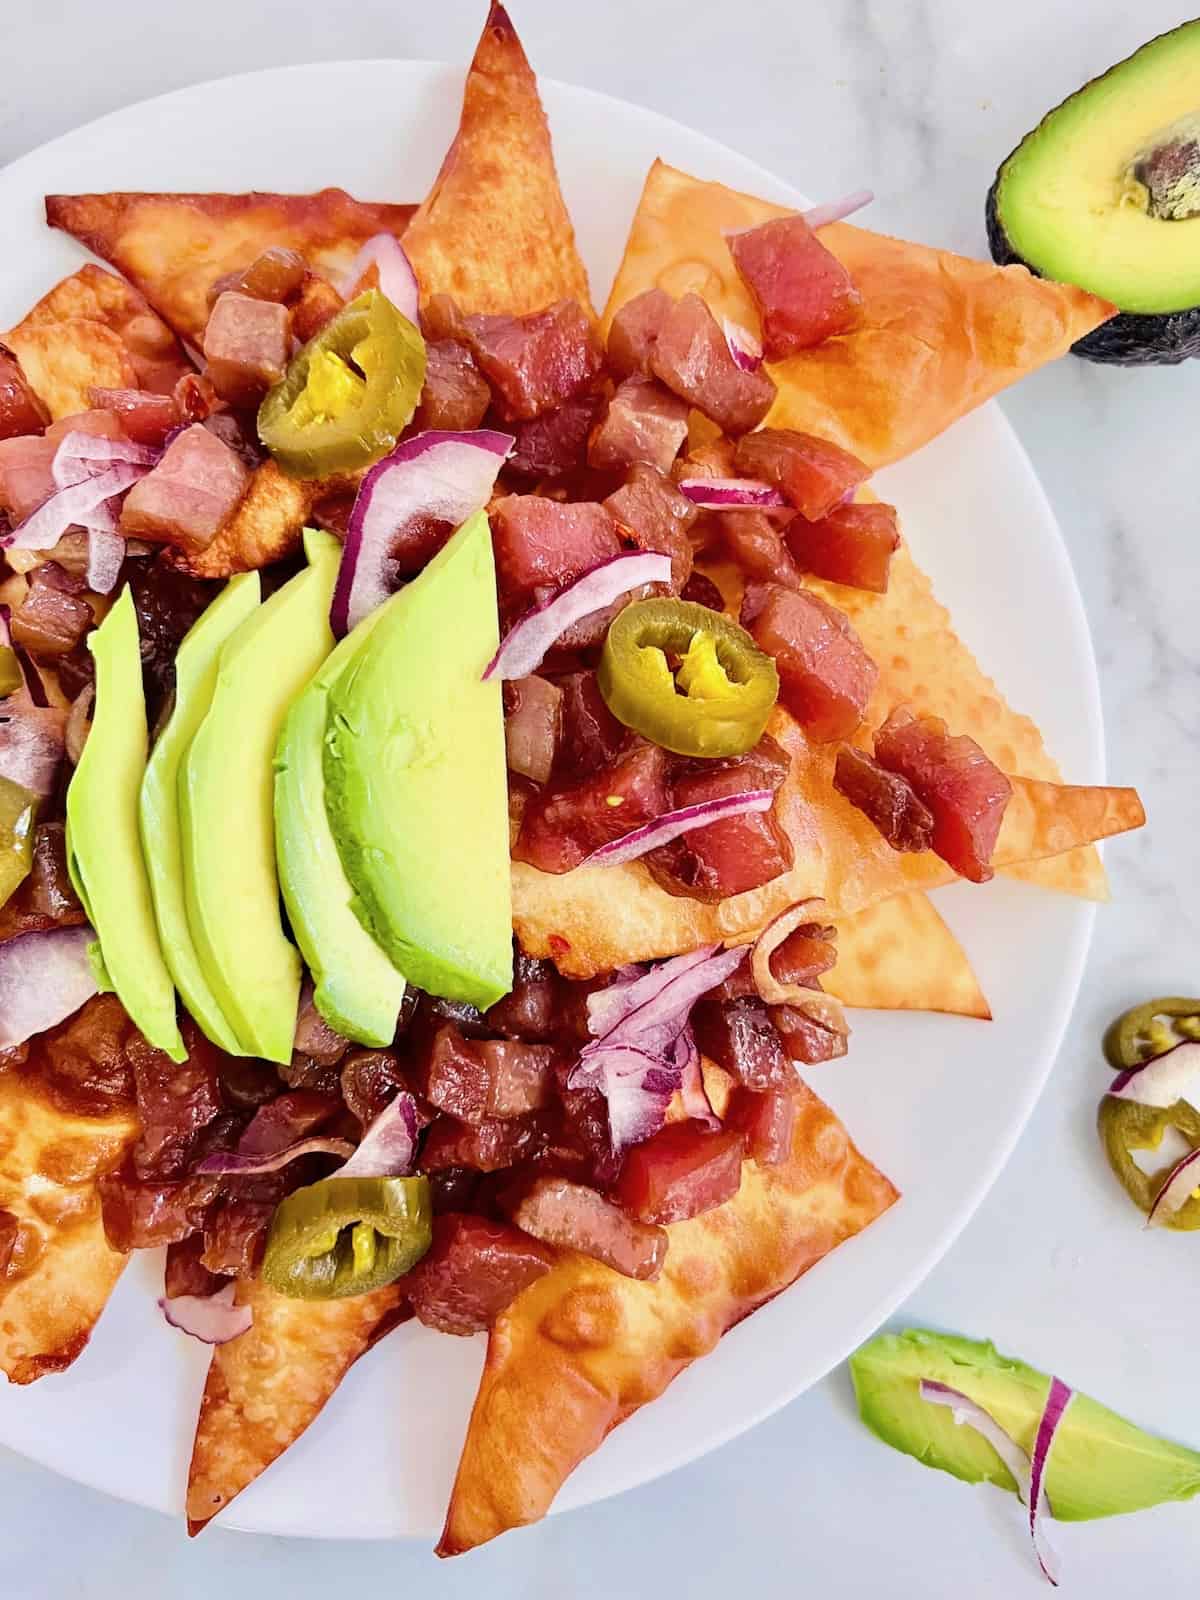 Ahi tuna poke nachos with avocado slices on a plate